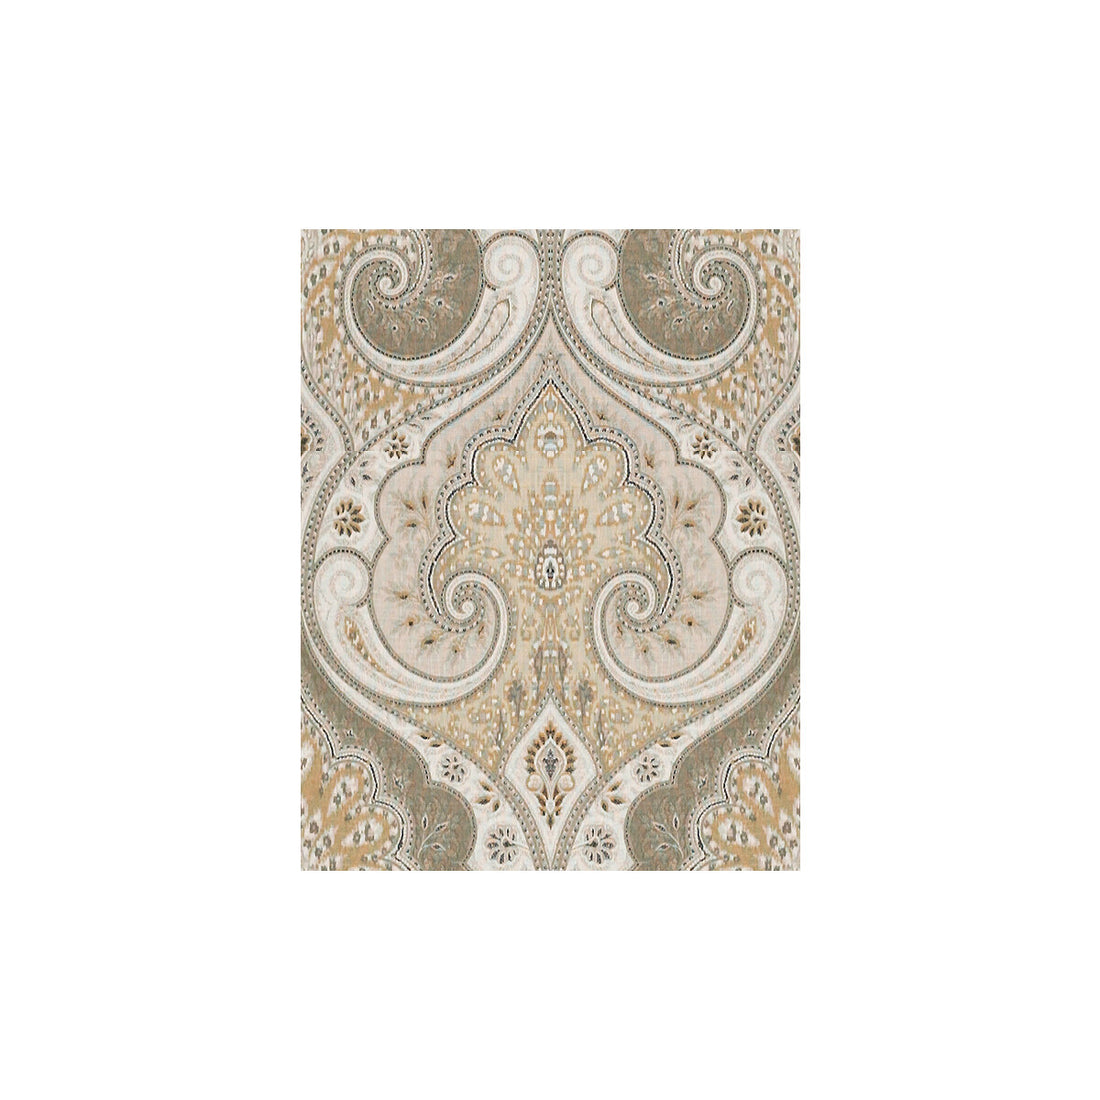 Latika fabric in limestone color - pattern LATIKA.11.0 - by Kravet Design in the The Echo Design collection